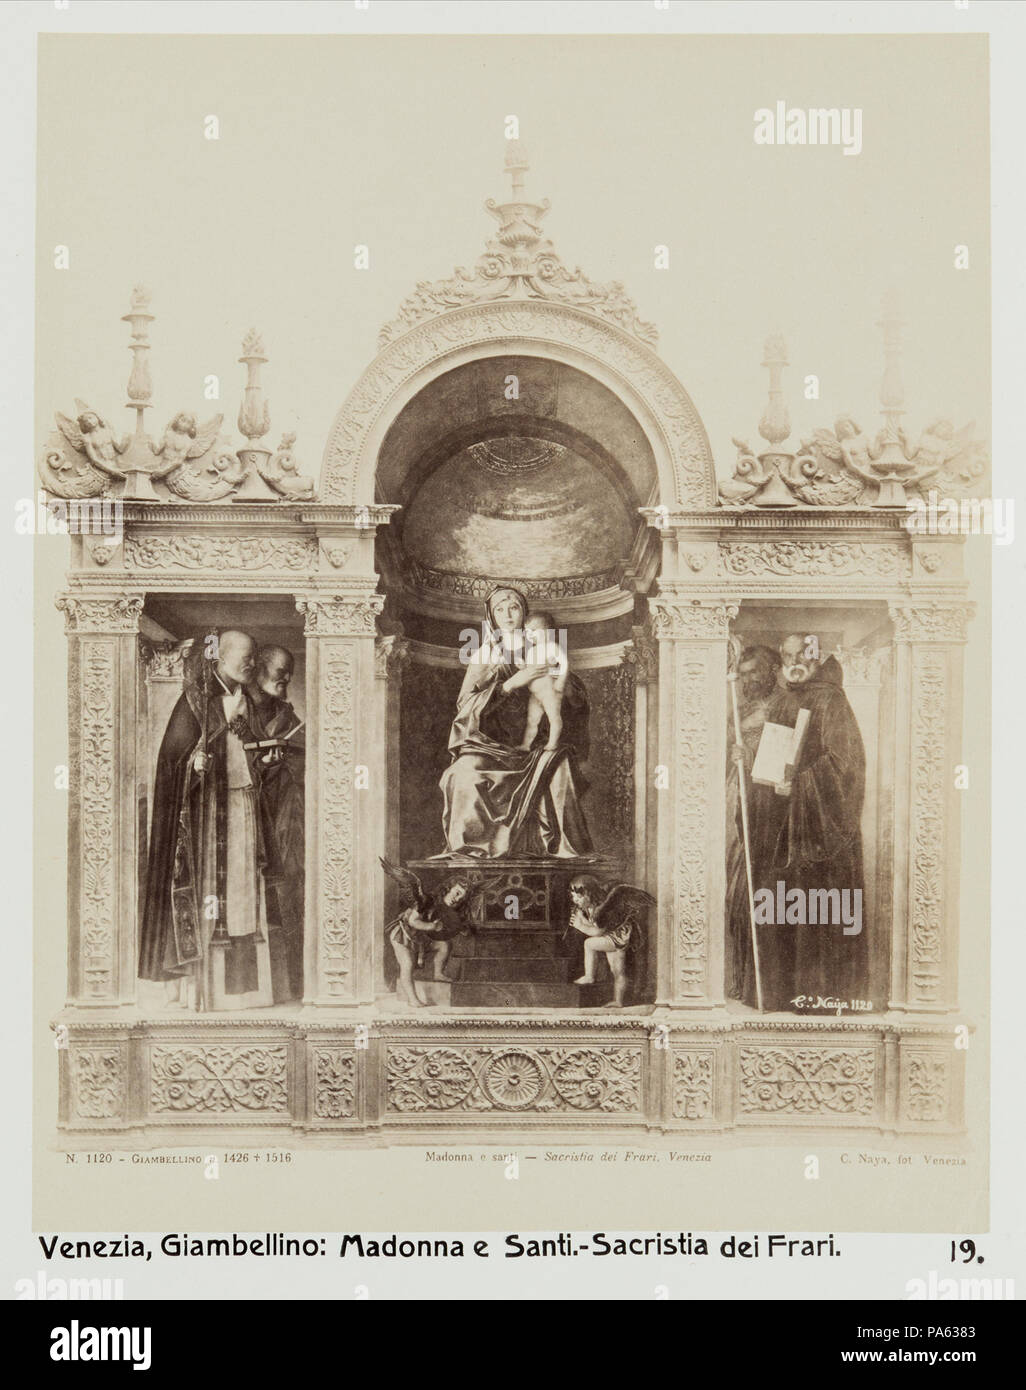 89 Fotografi av Venezia. Giambellino, Madonna e Santi, Sacristia dei Frari - Hallwylska museet - 104926 Stock Photo